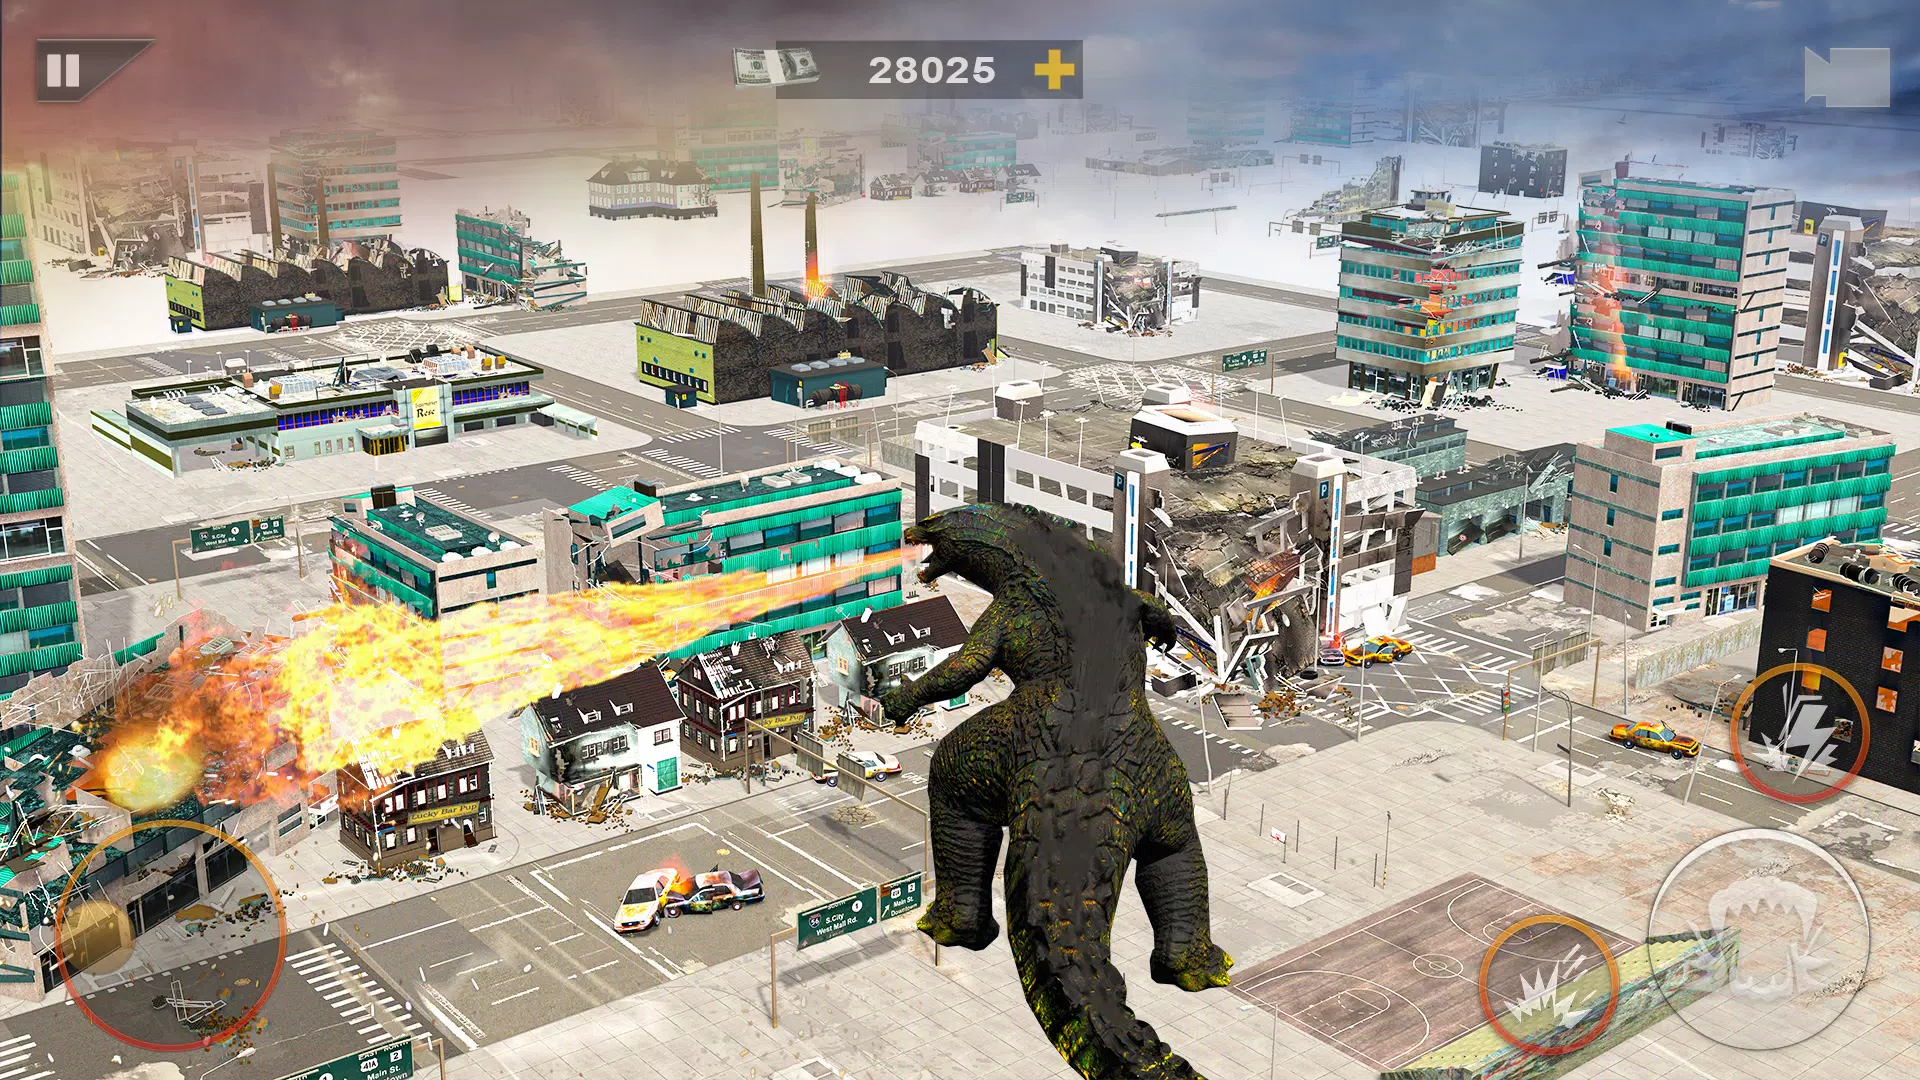 Download do APK de Dinossauro Jogos: Rampage para Android